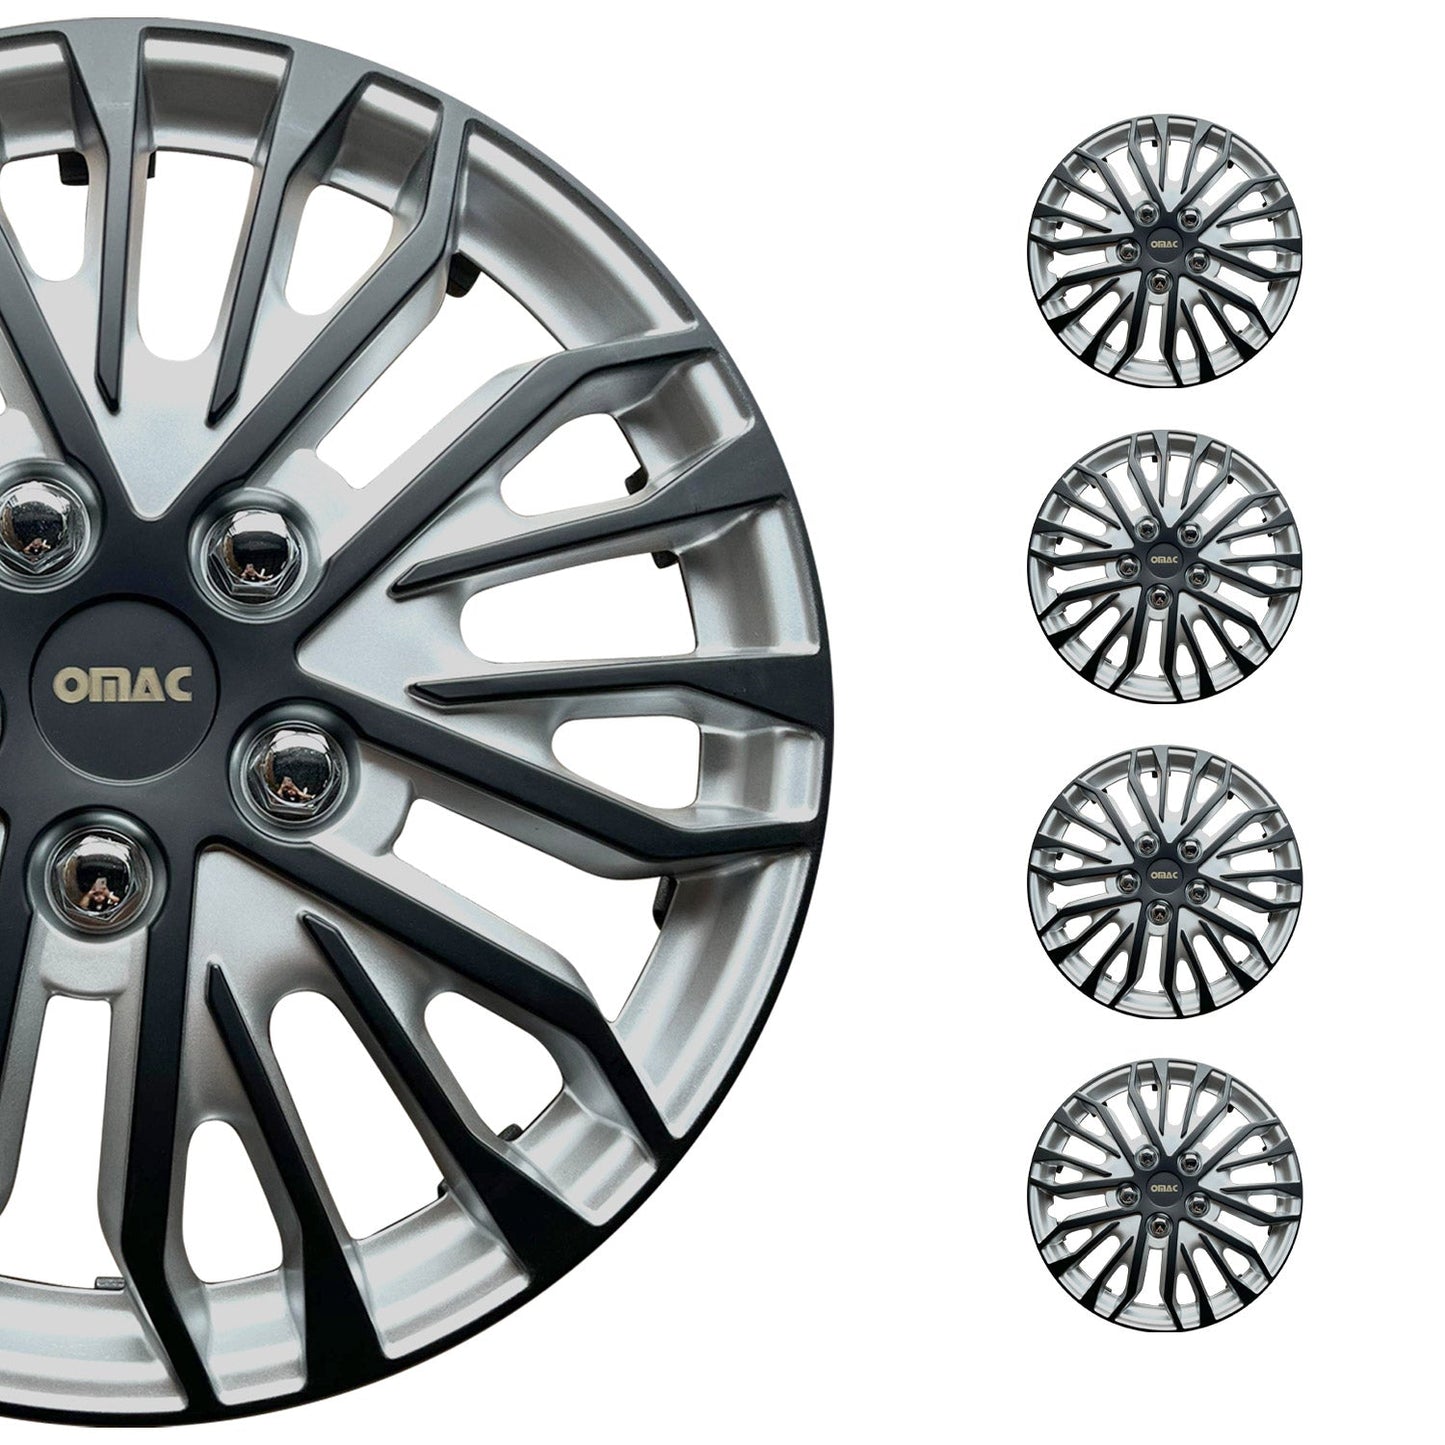 OMAC 14" Wheel Covers Guard Hub Caps Durable Snap On ABS Silver Matt Black 4x OMAC-WE41-SVMBK14